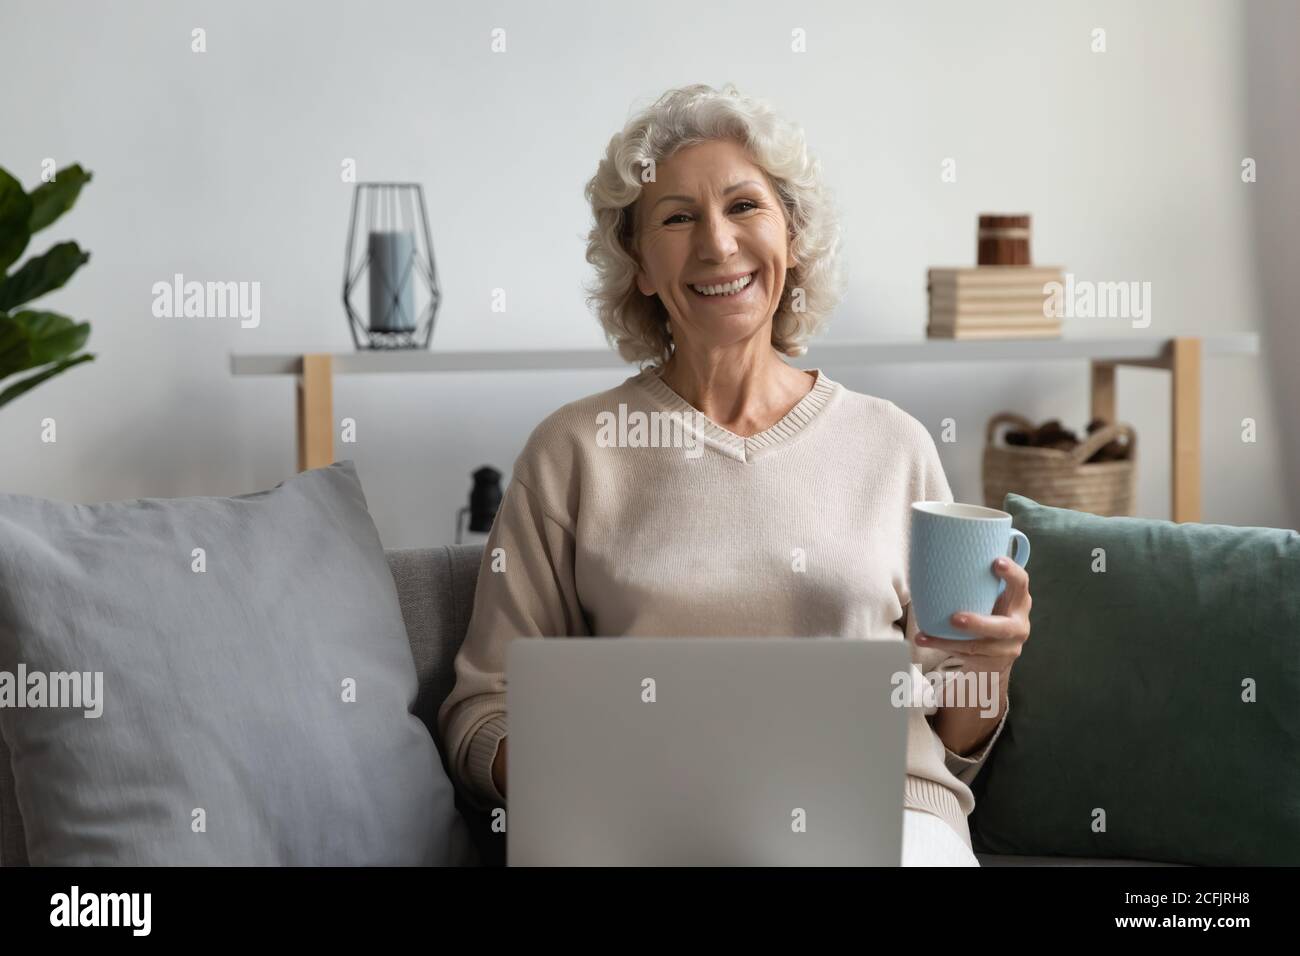 Portrait smiling mature woman enjoying leisure time, using laptop Stock Photo